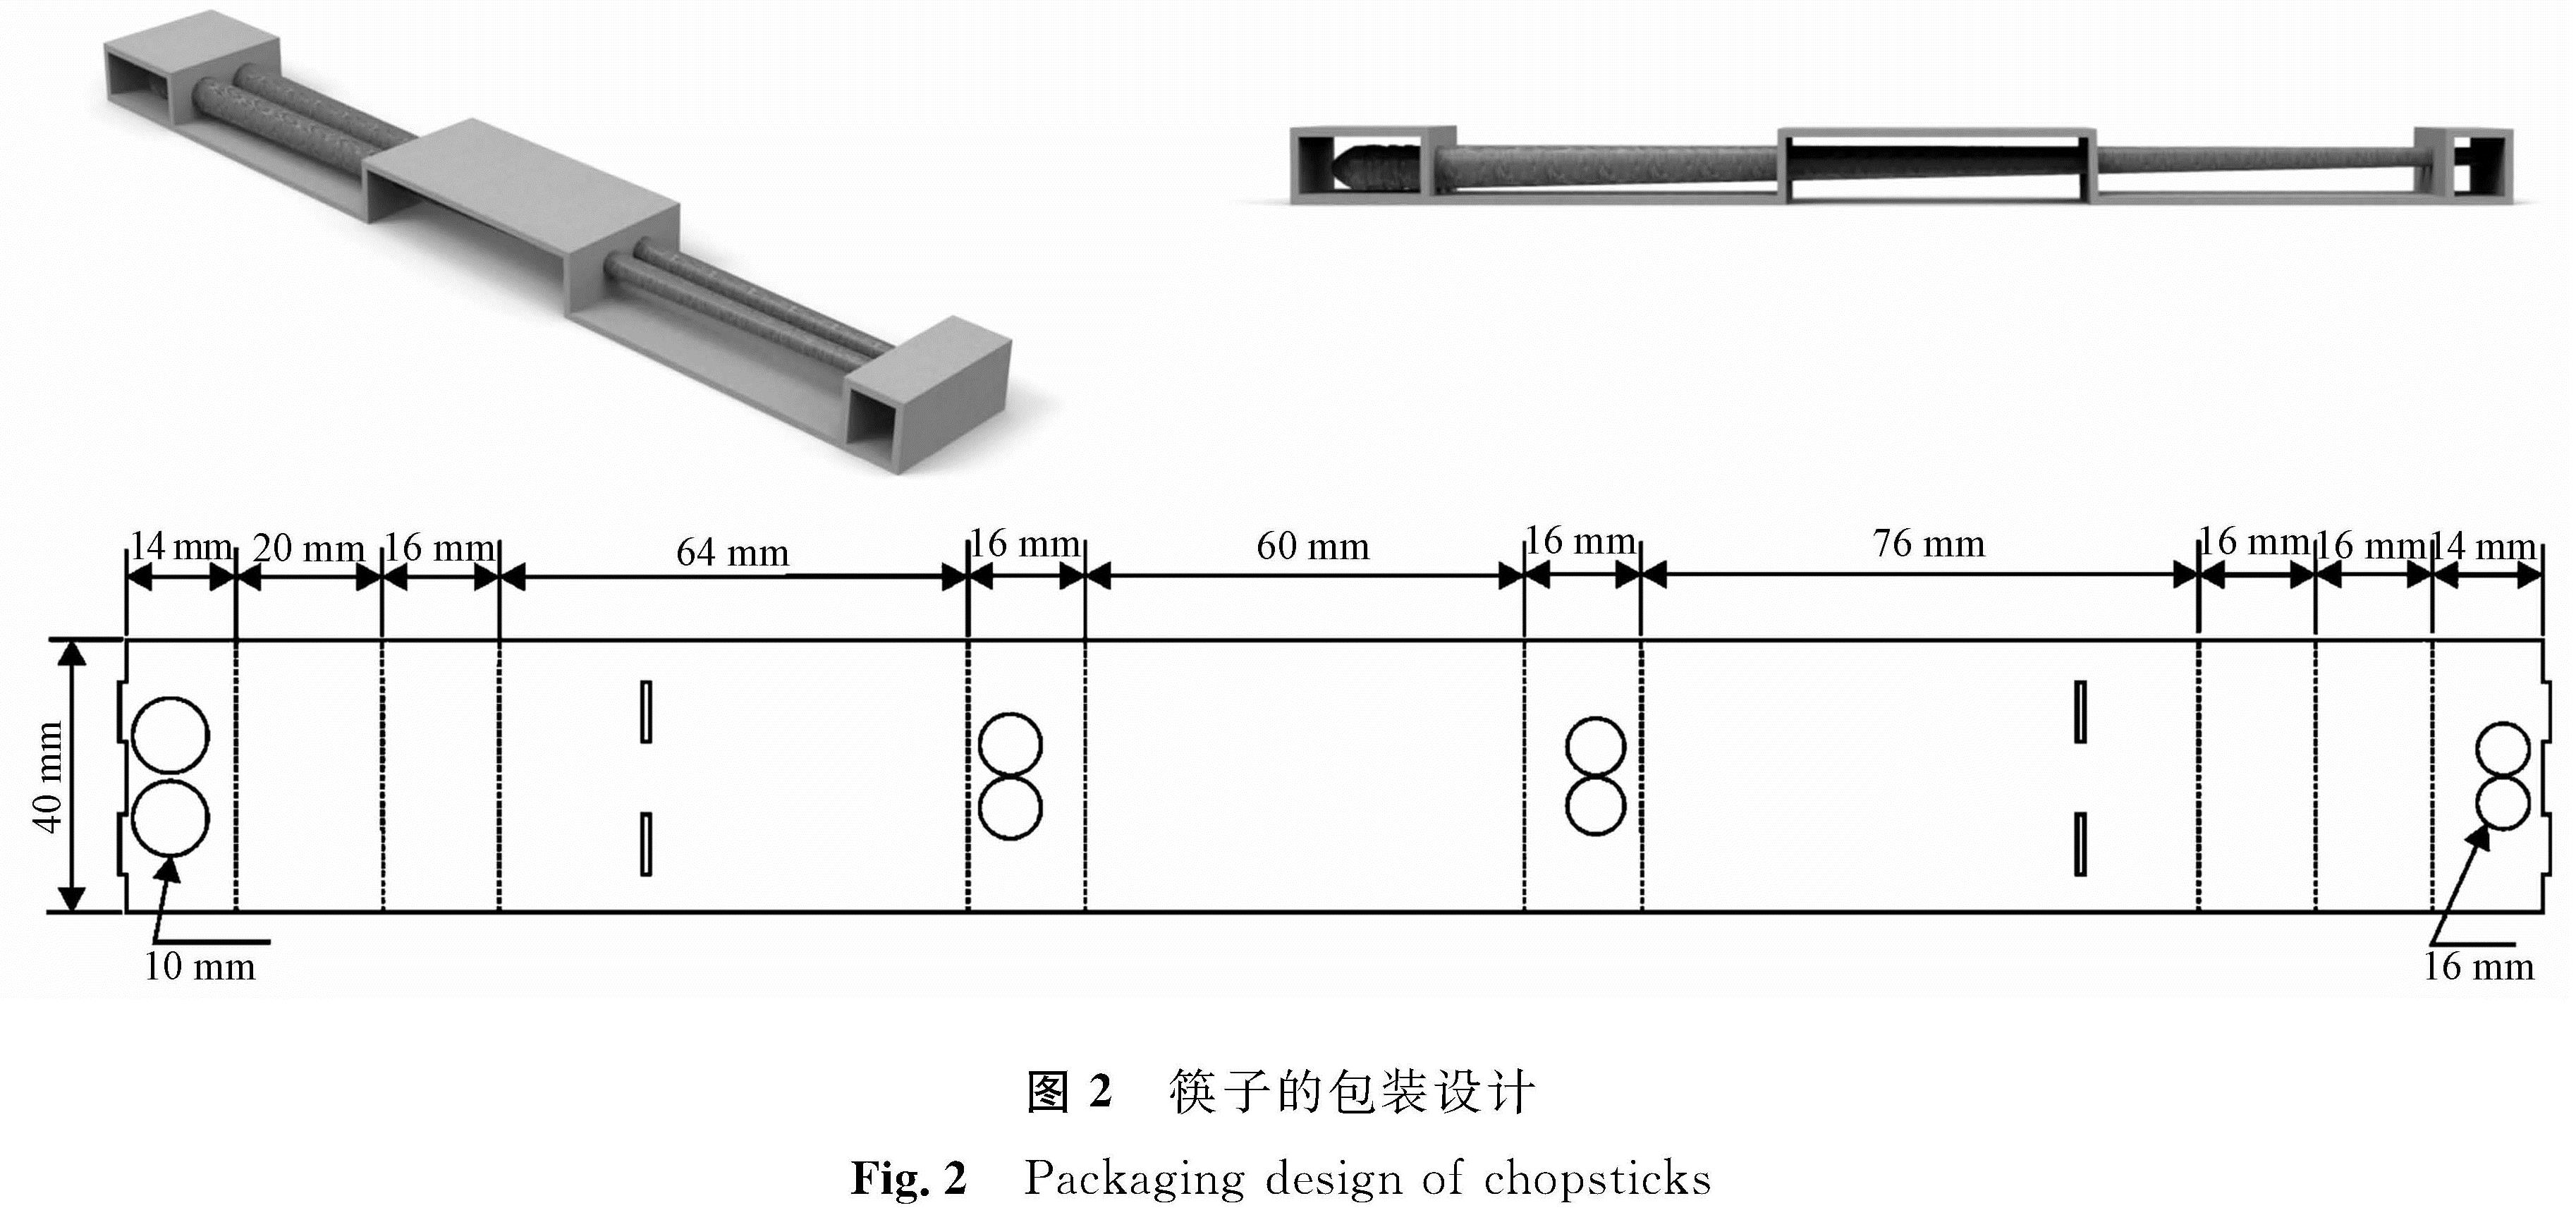 图2 筷子的包装设计<br/>Fig.2 Packaging design of chopsticks